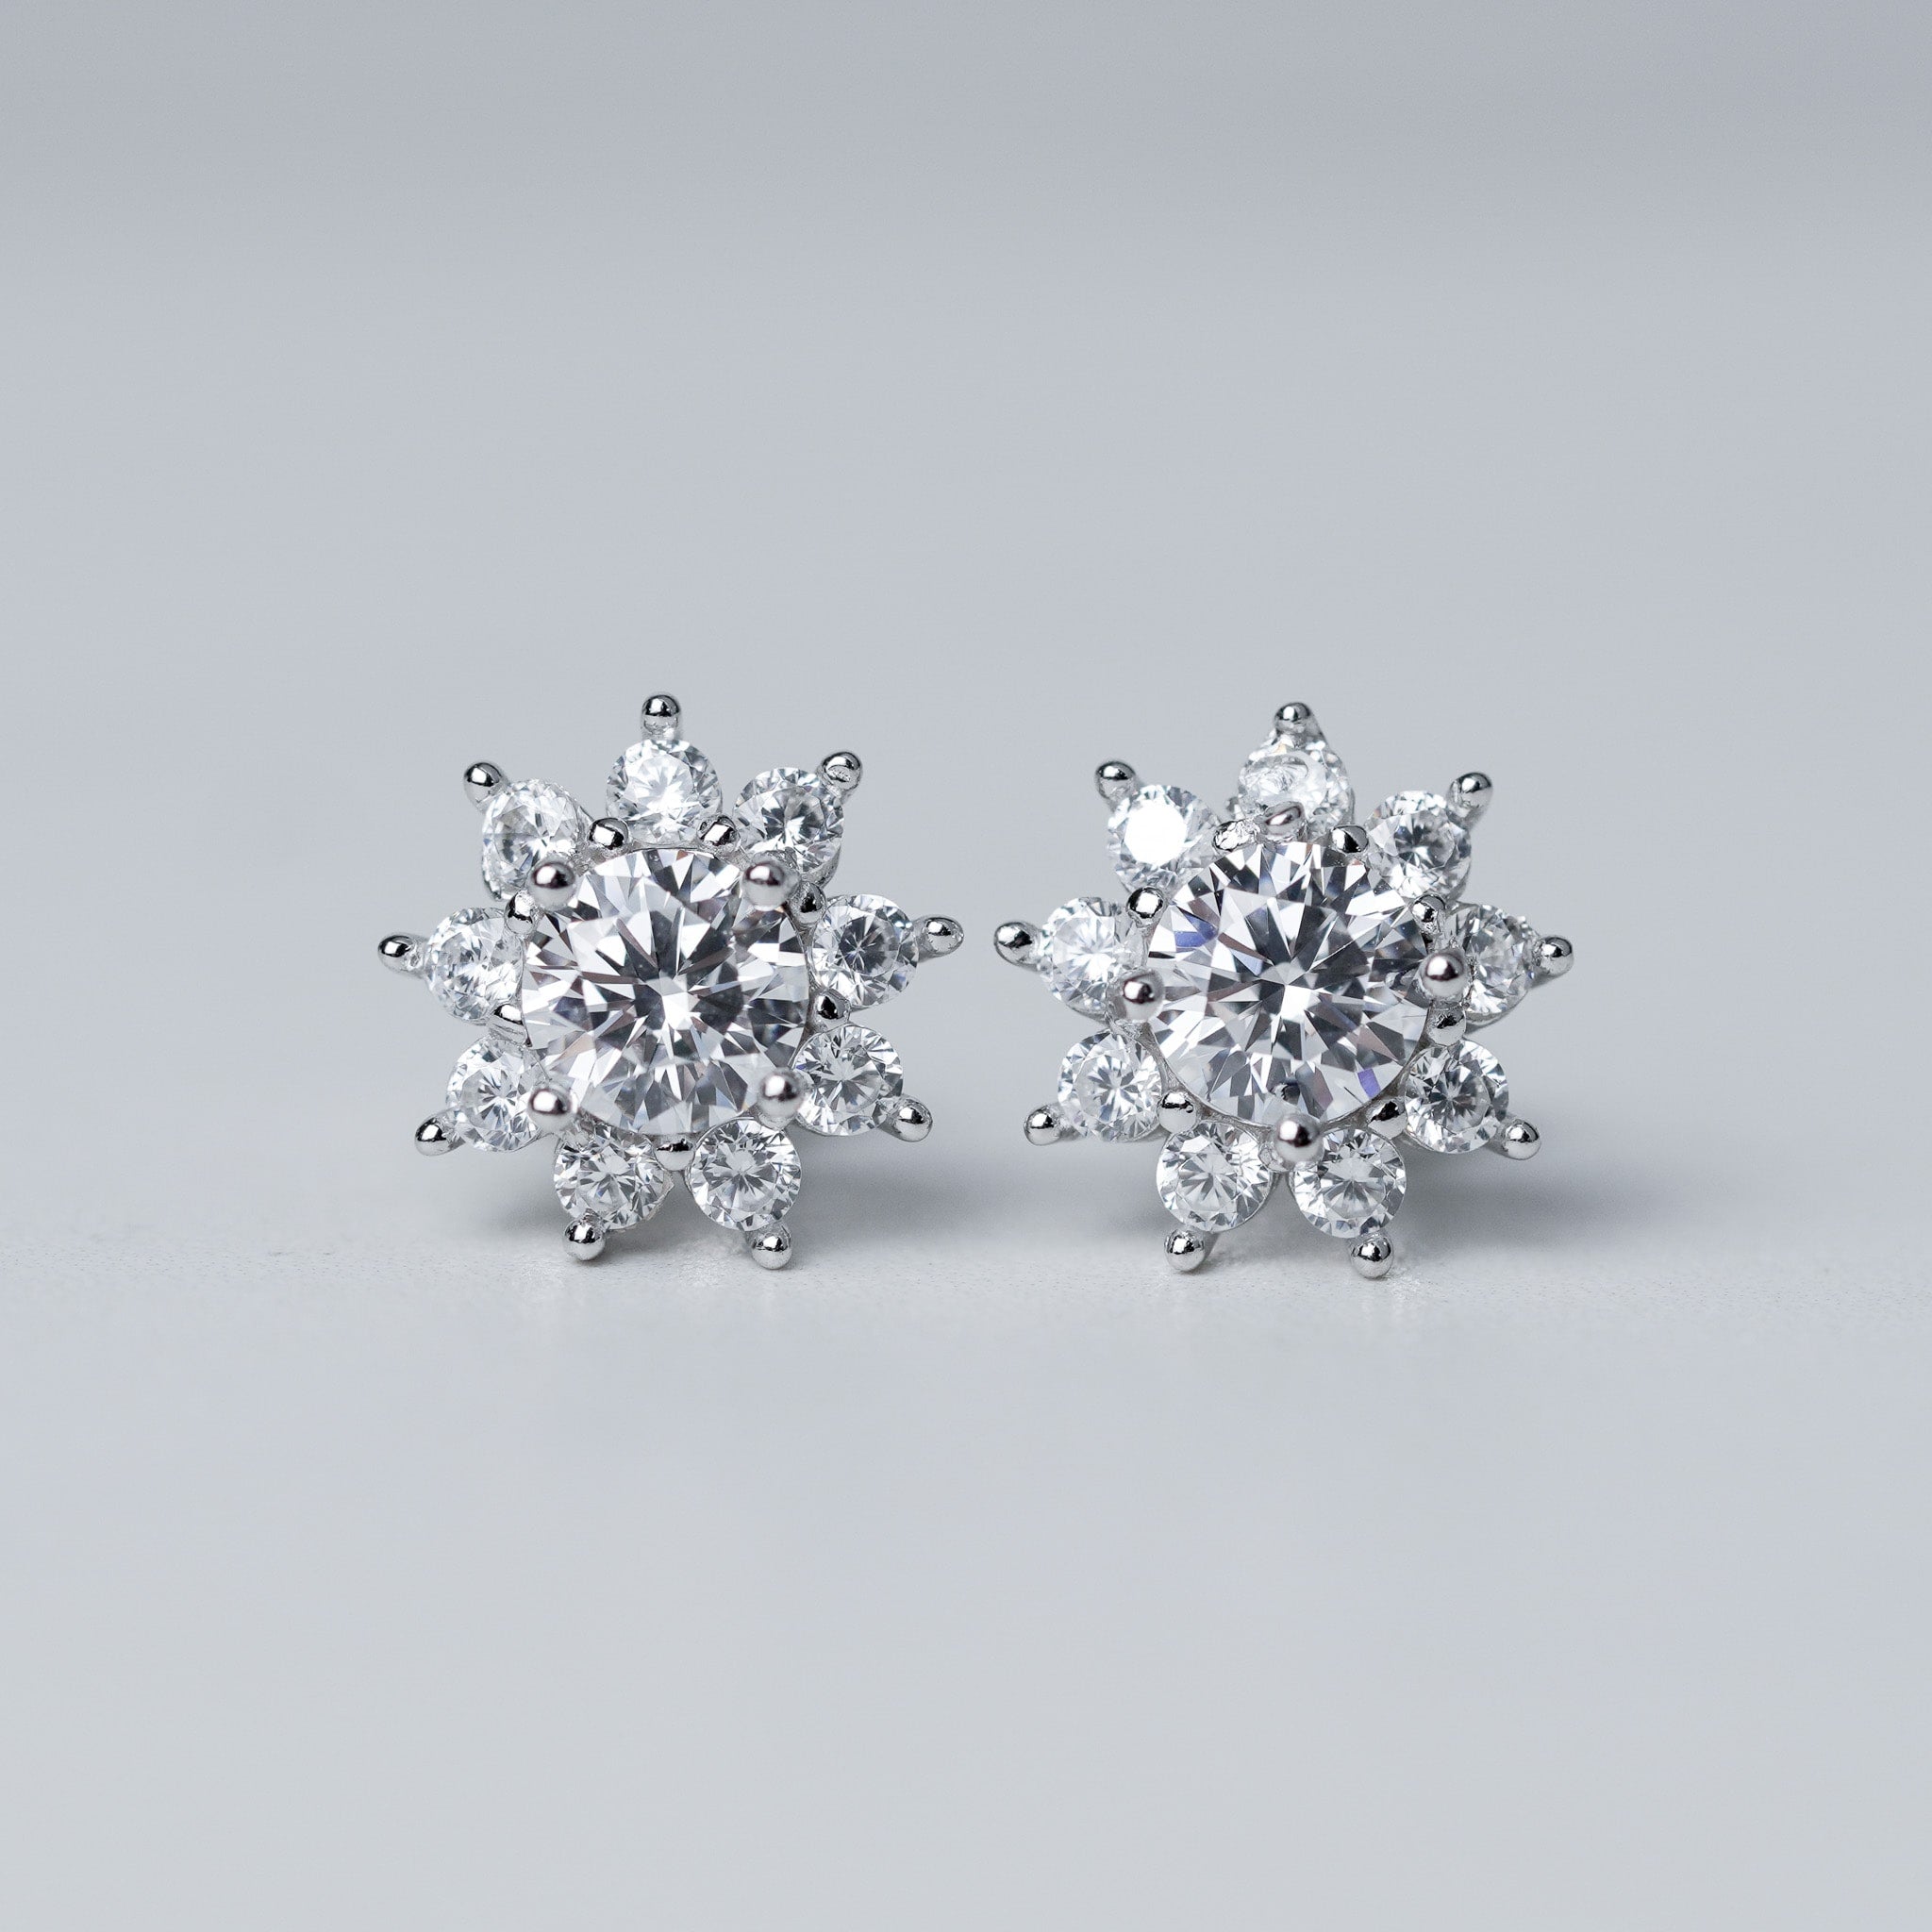 Halo Diamond Earrings with Flower SImulated Diamonds